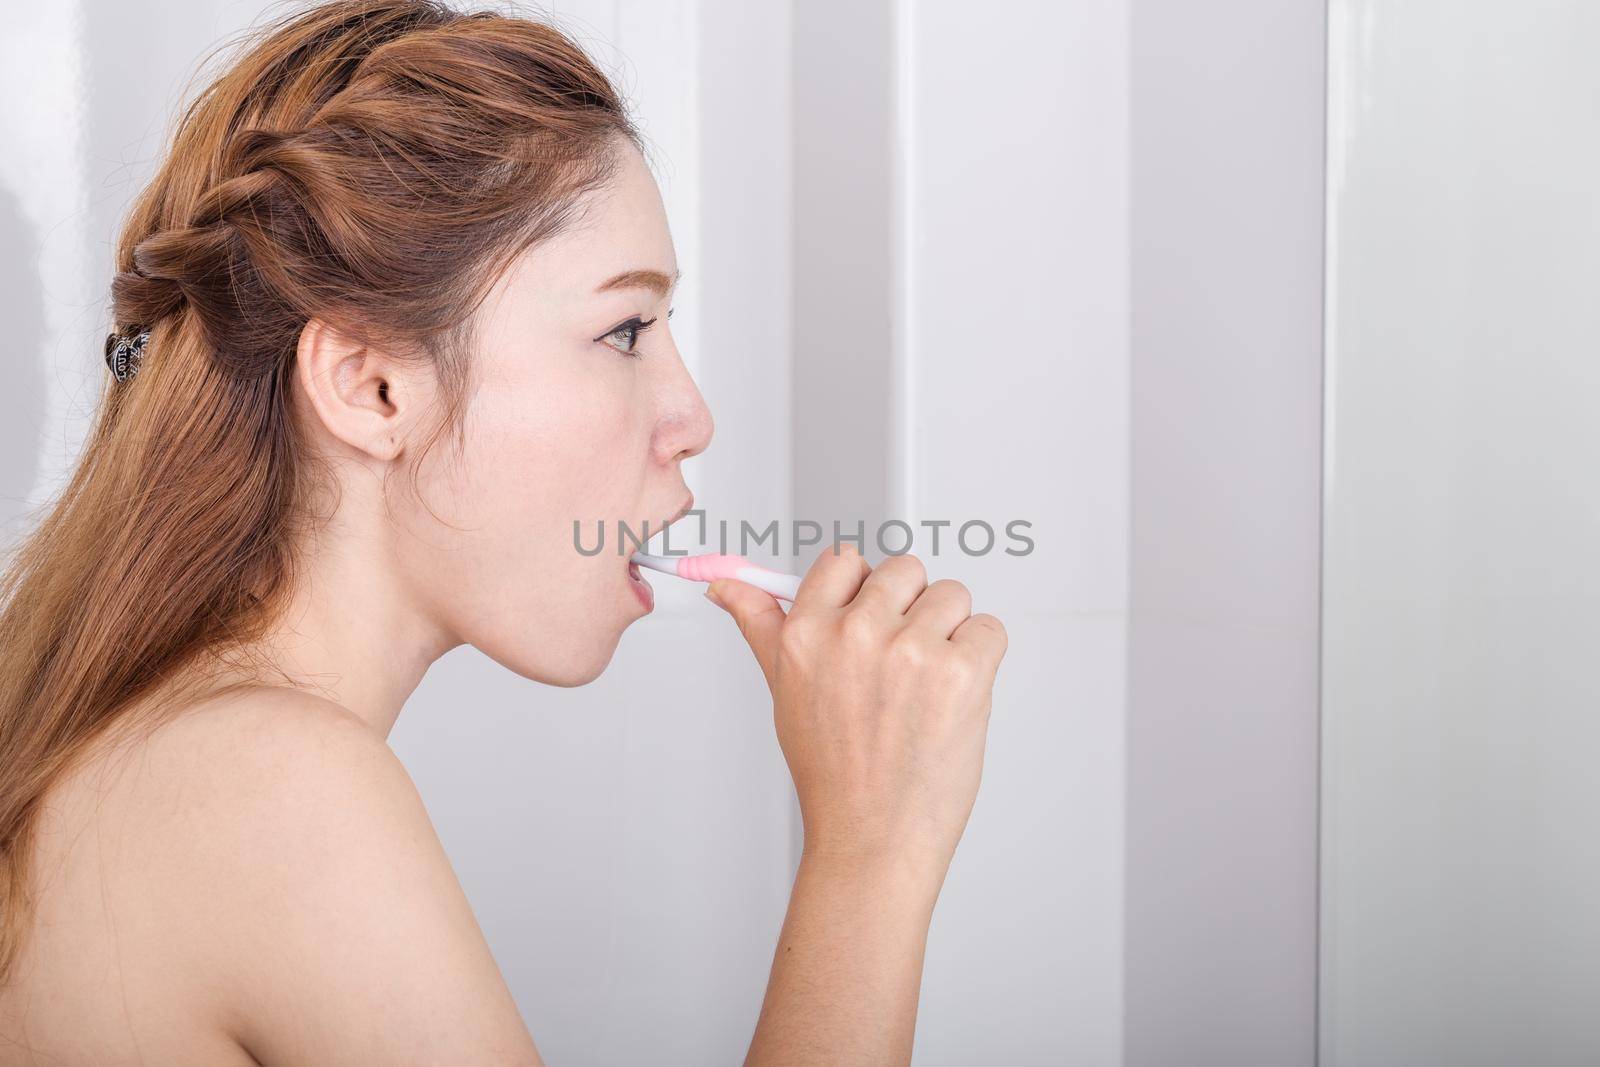 woman brushing teeth in the bathroom